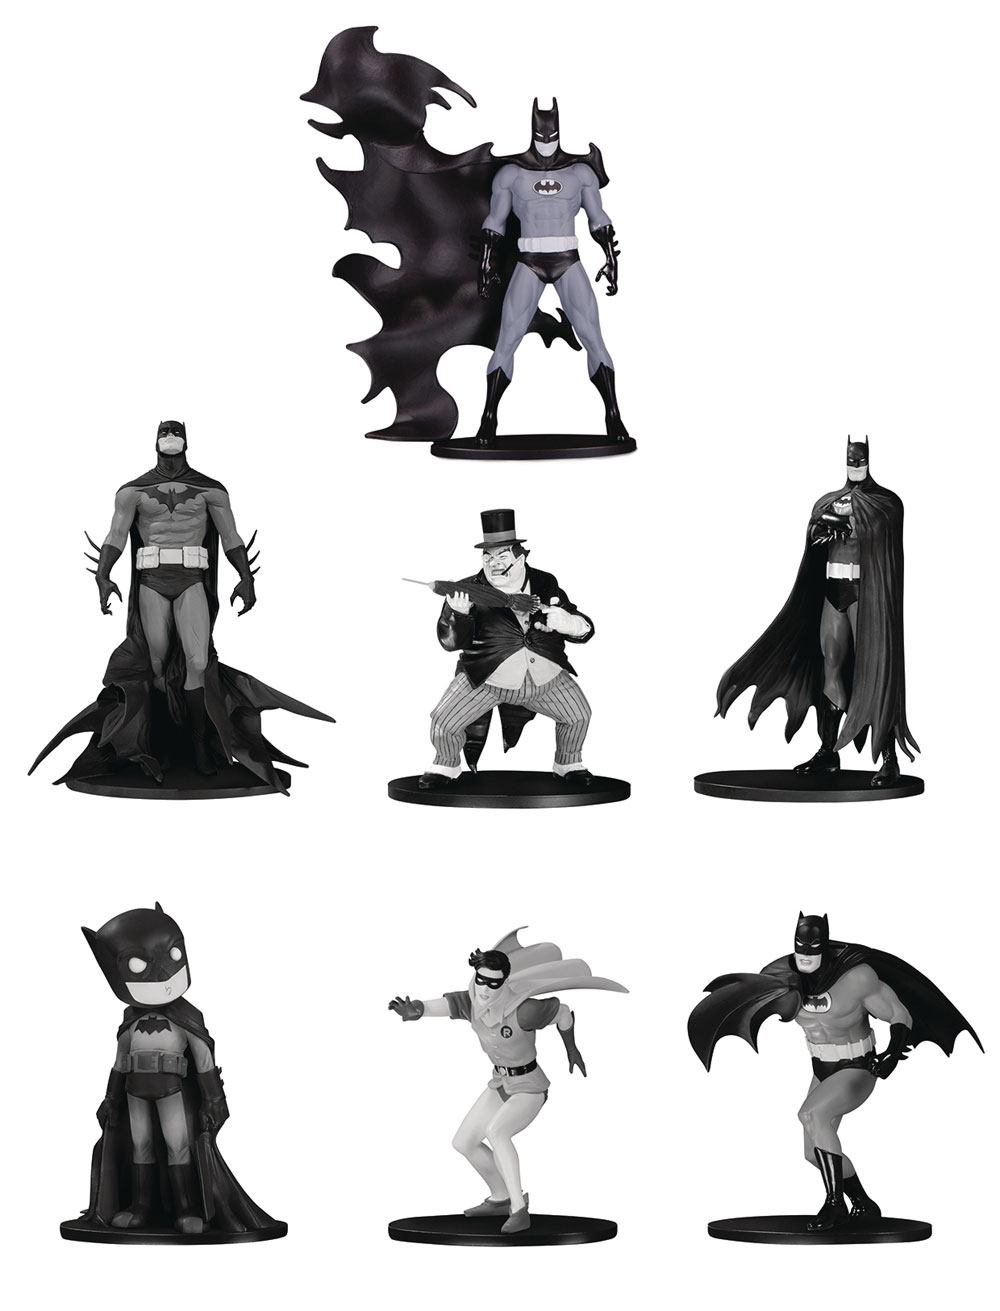 Set #4 Pack de 7 Minifiguras Box Batman Black & White PVC 10cm DC Direct